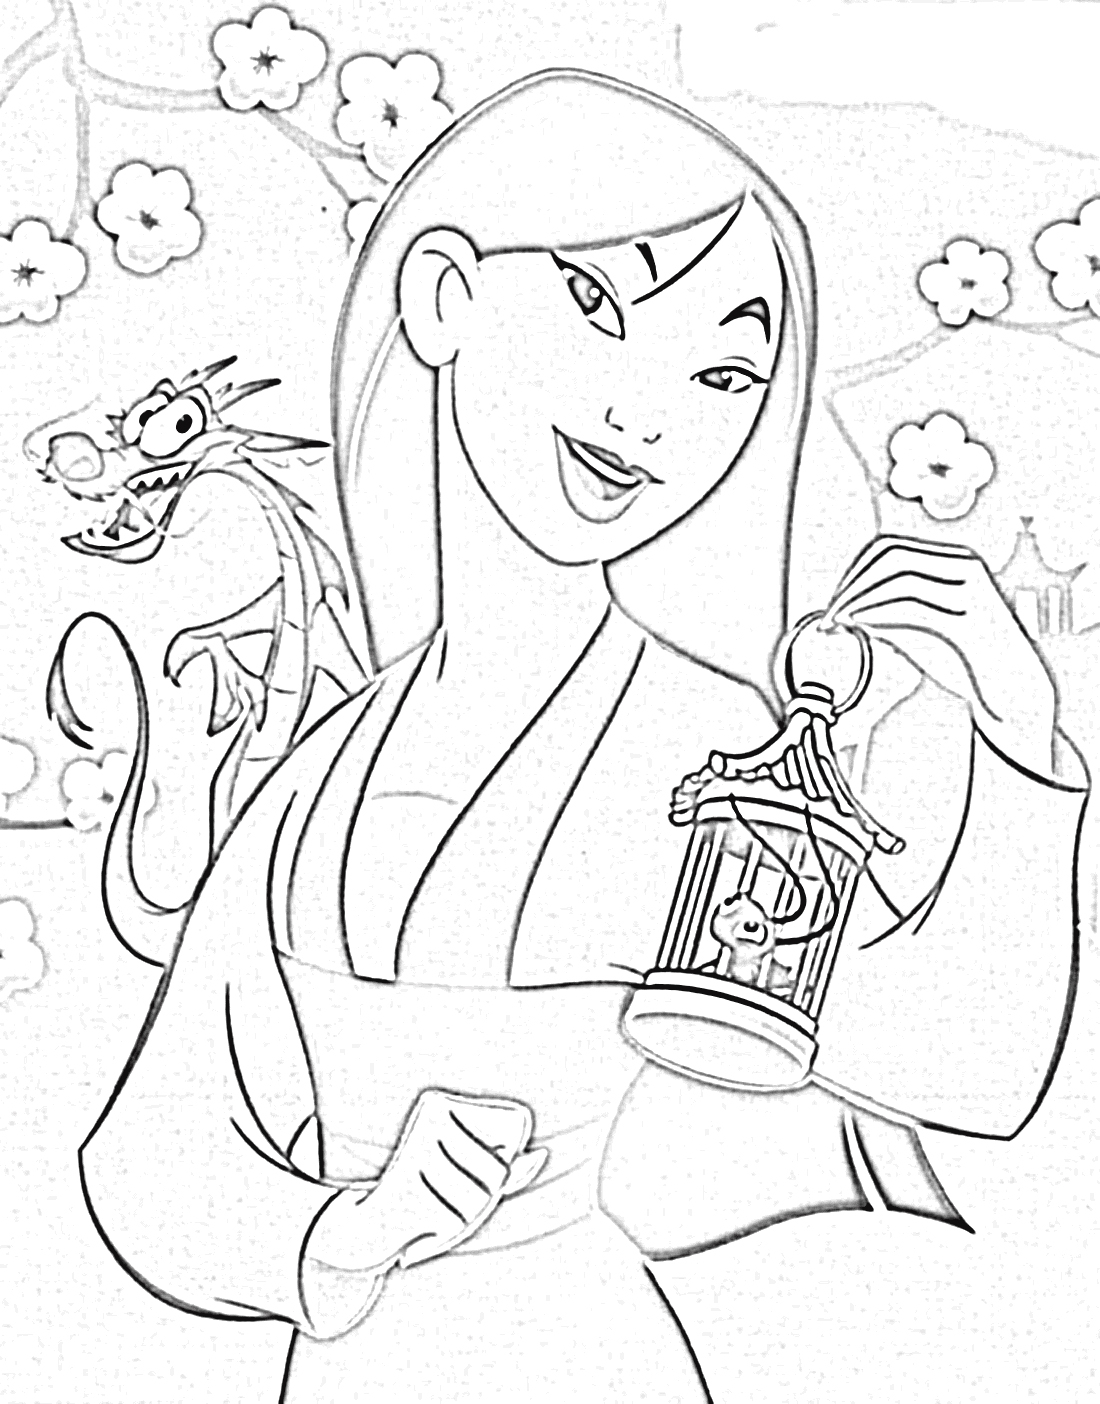 Drawing Mulan 20 Animation Movies – Printable coloring pages